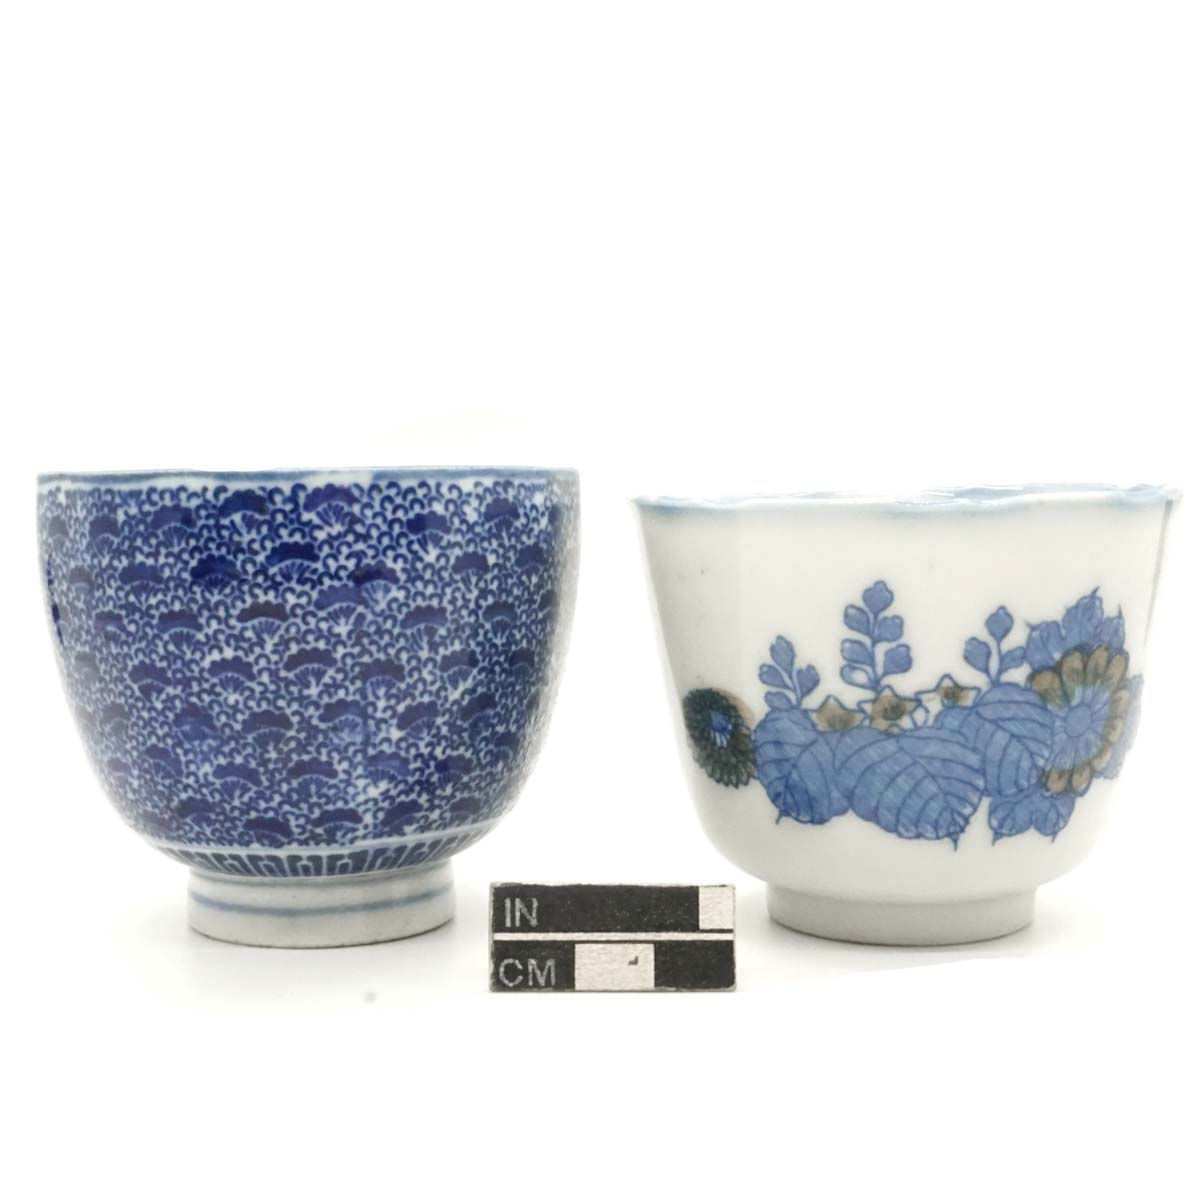 Soba-choko (sauce cups for noodles), katagami stencil and transferprint (doban) decoration, porcelain.